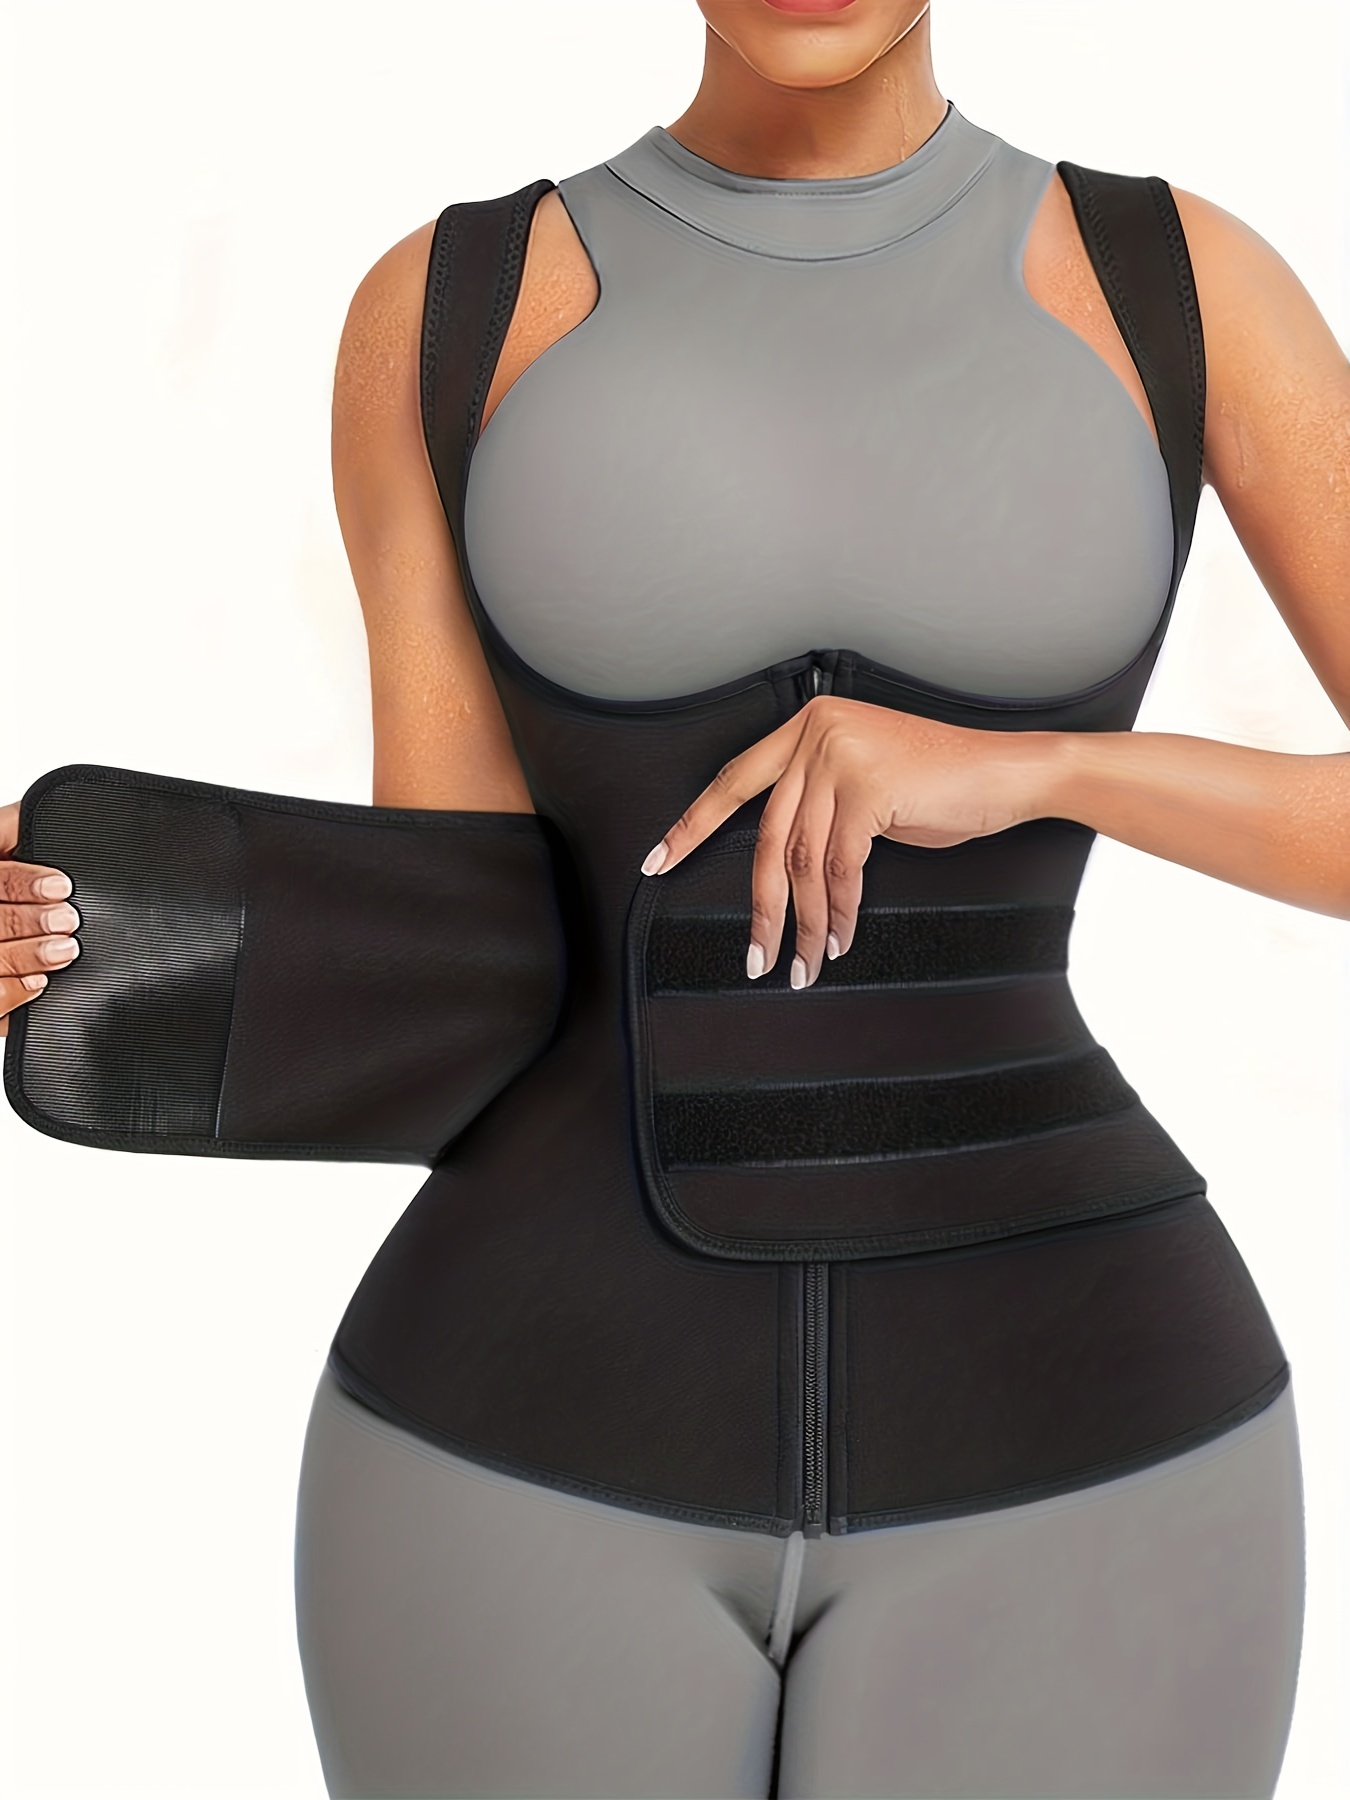 Shop Generic Women Body Shapewear Slimming Tank Top Tummy Control